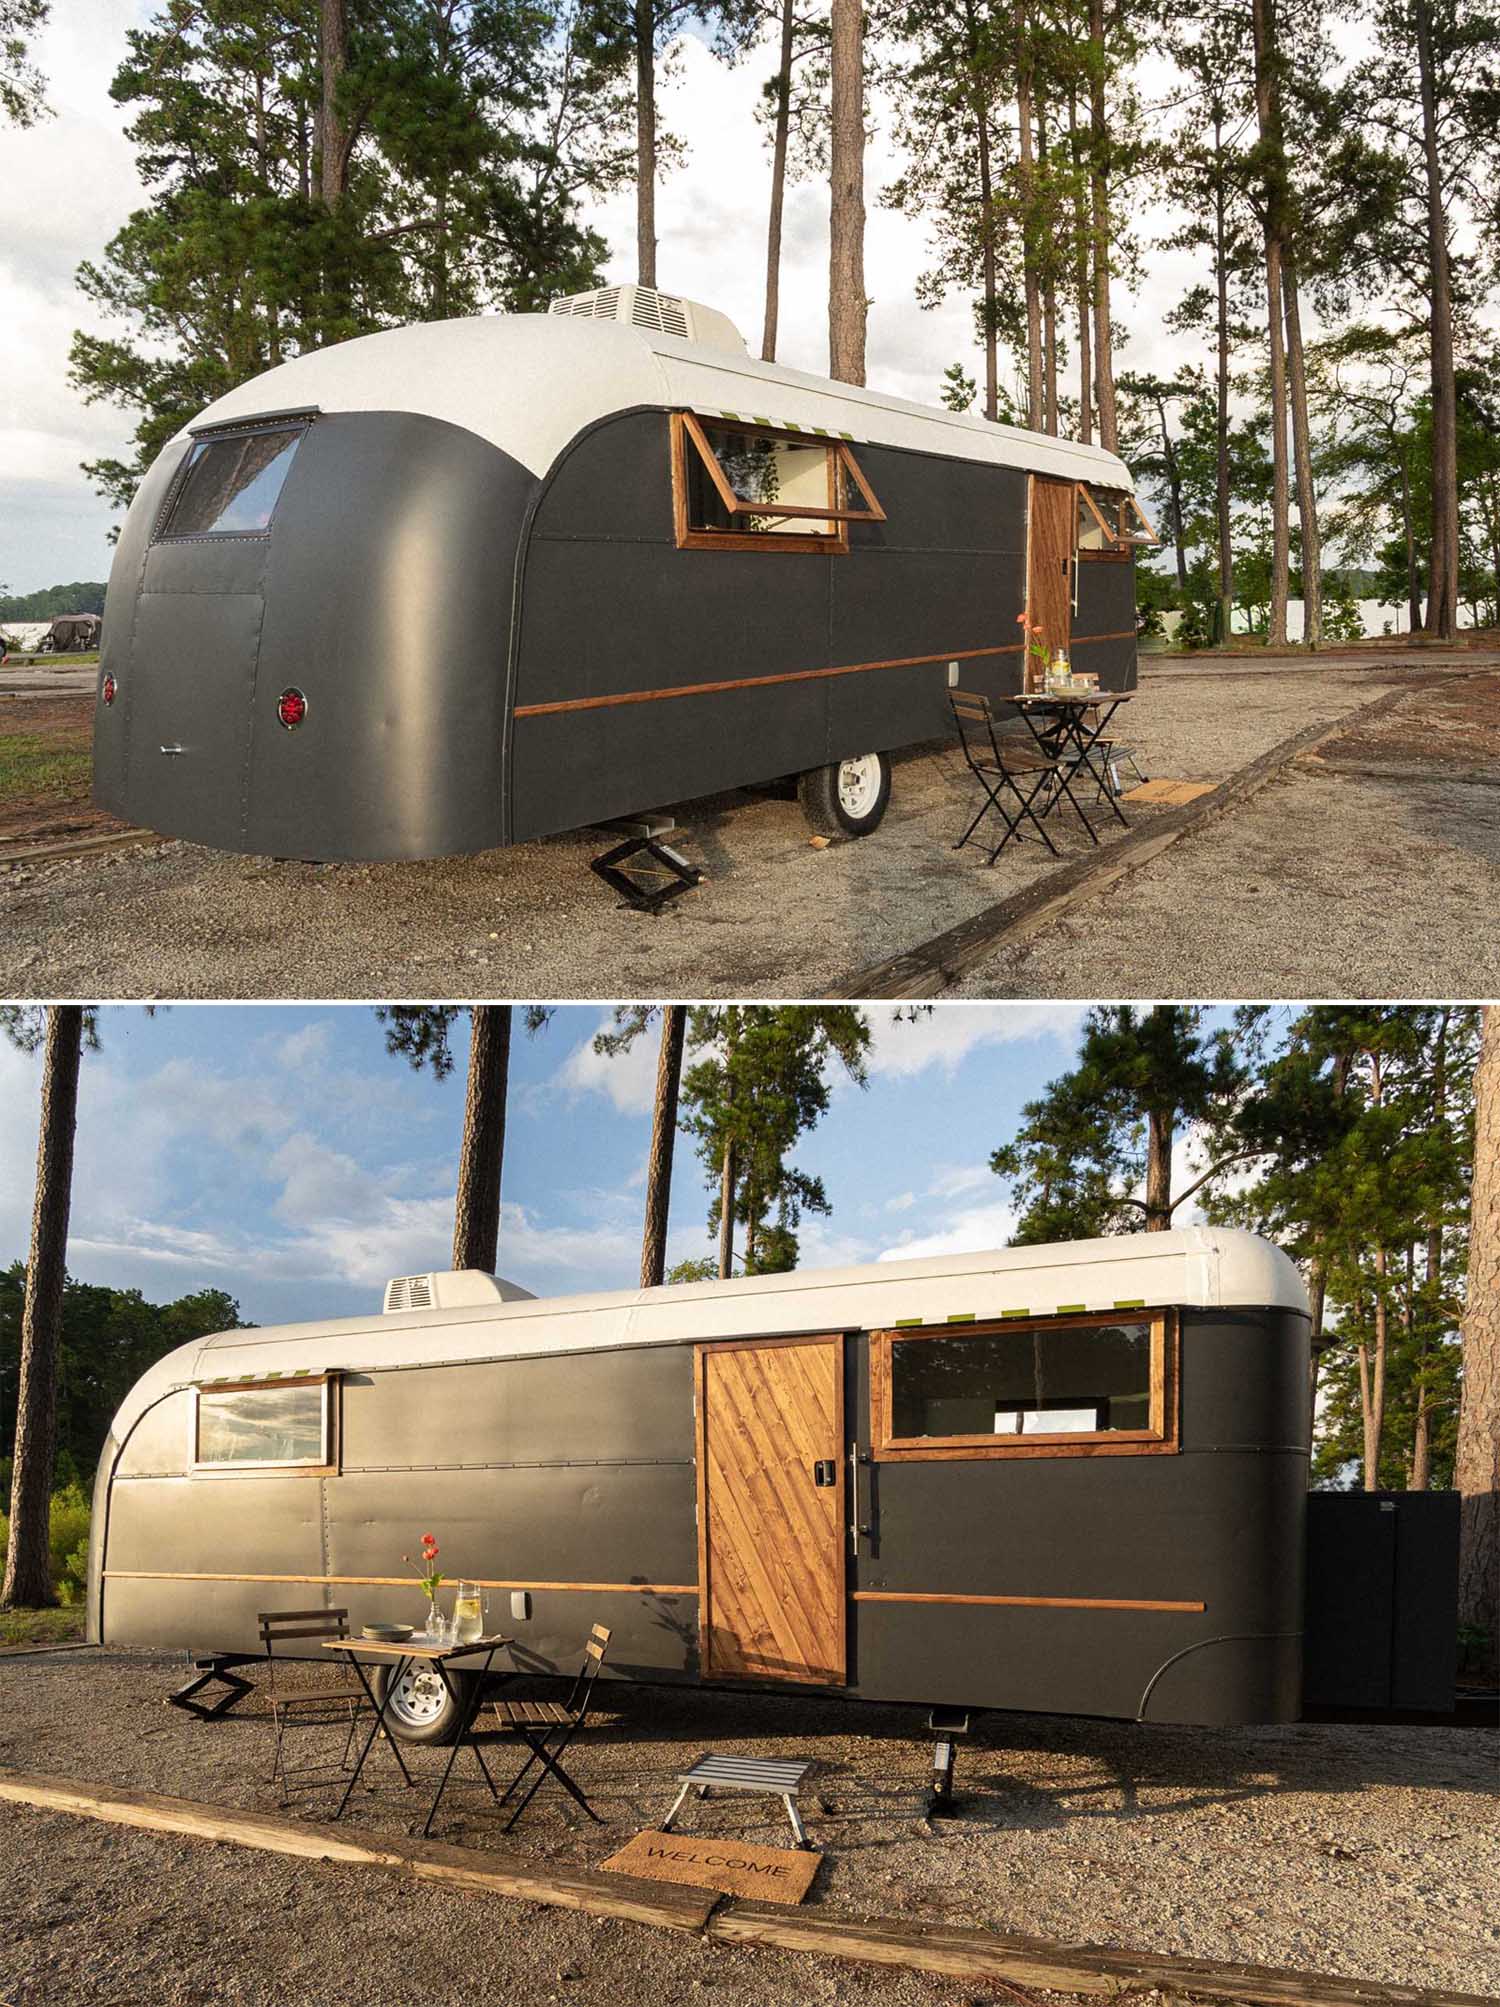 This remodeled vintage 1948 Vagabond 23 travel trailer includes a matte black exterior, living room, kitchen, bedroom, and bathroom.